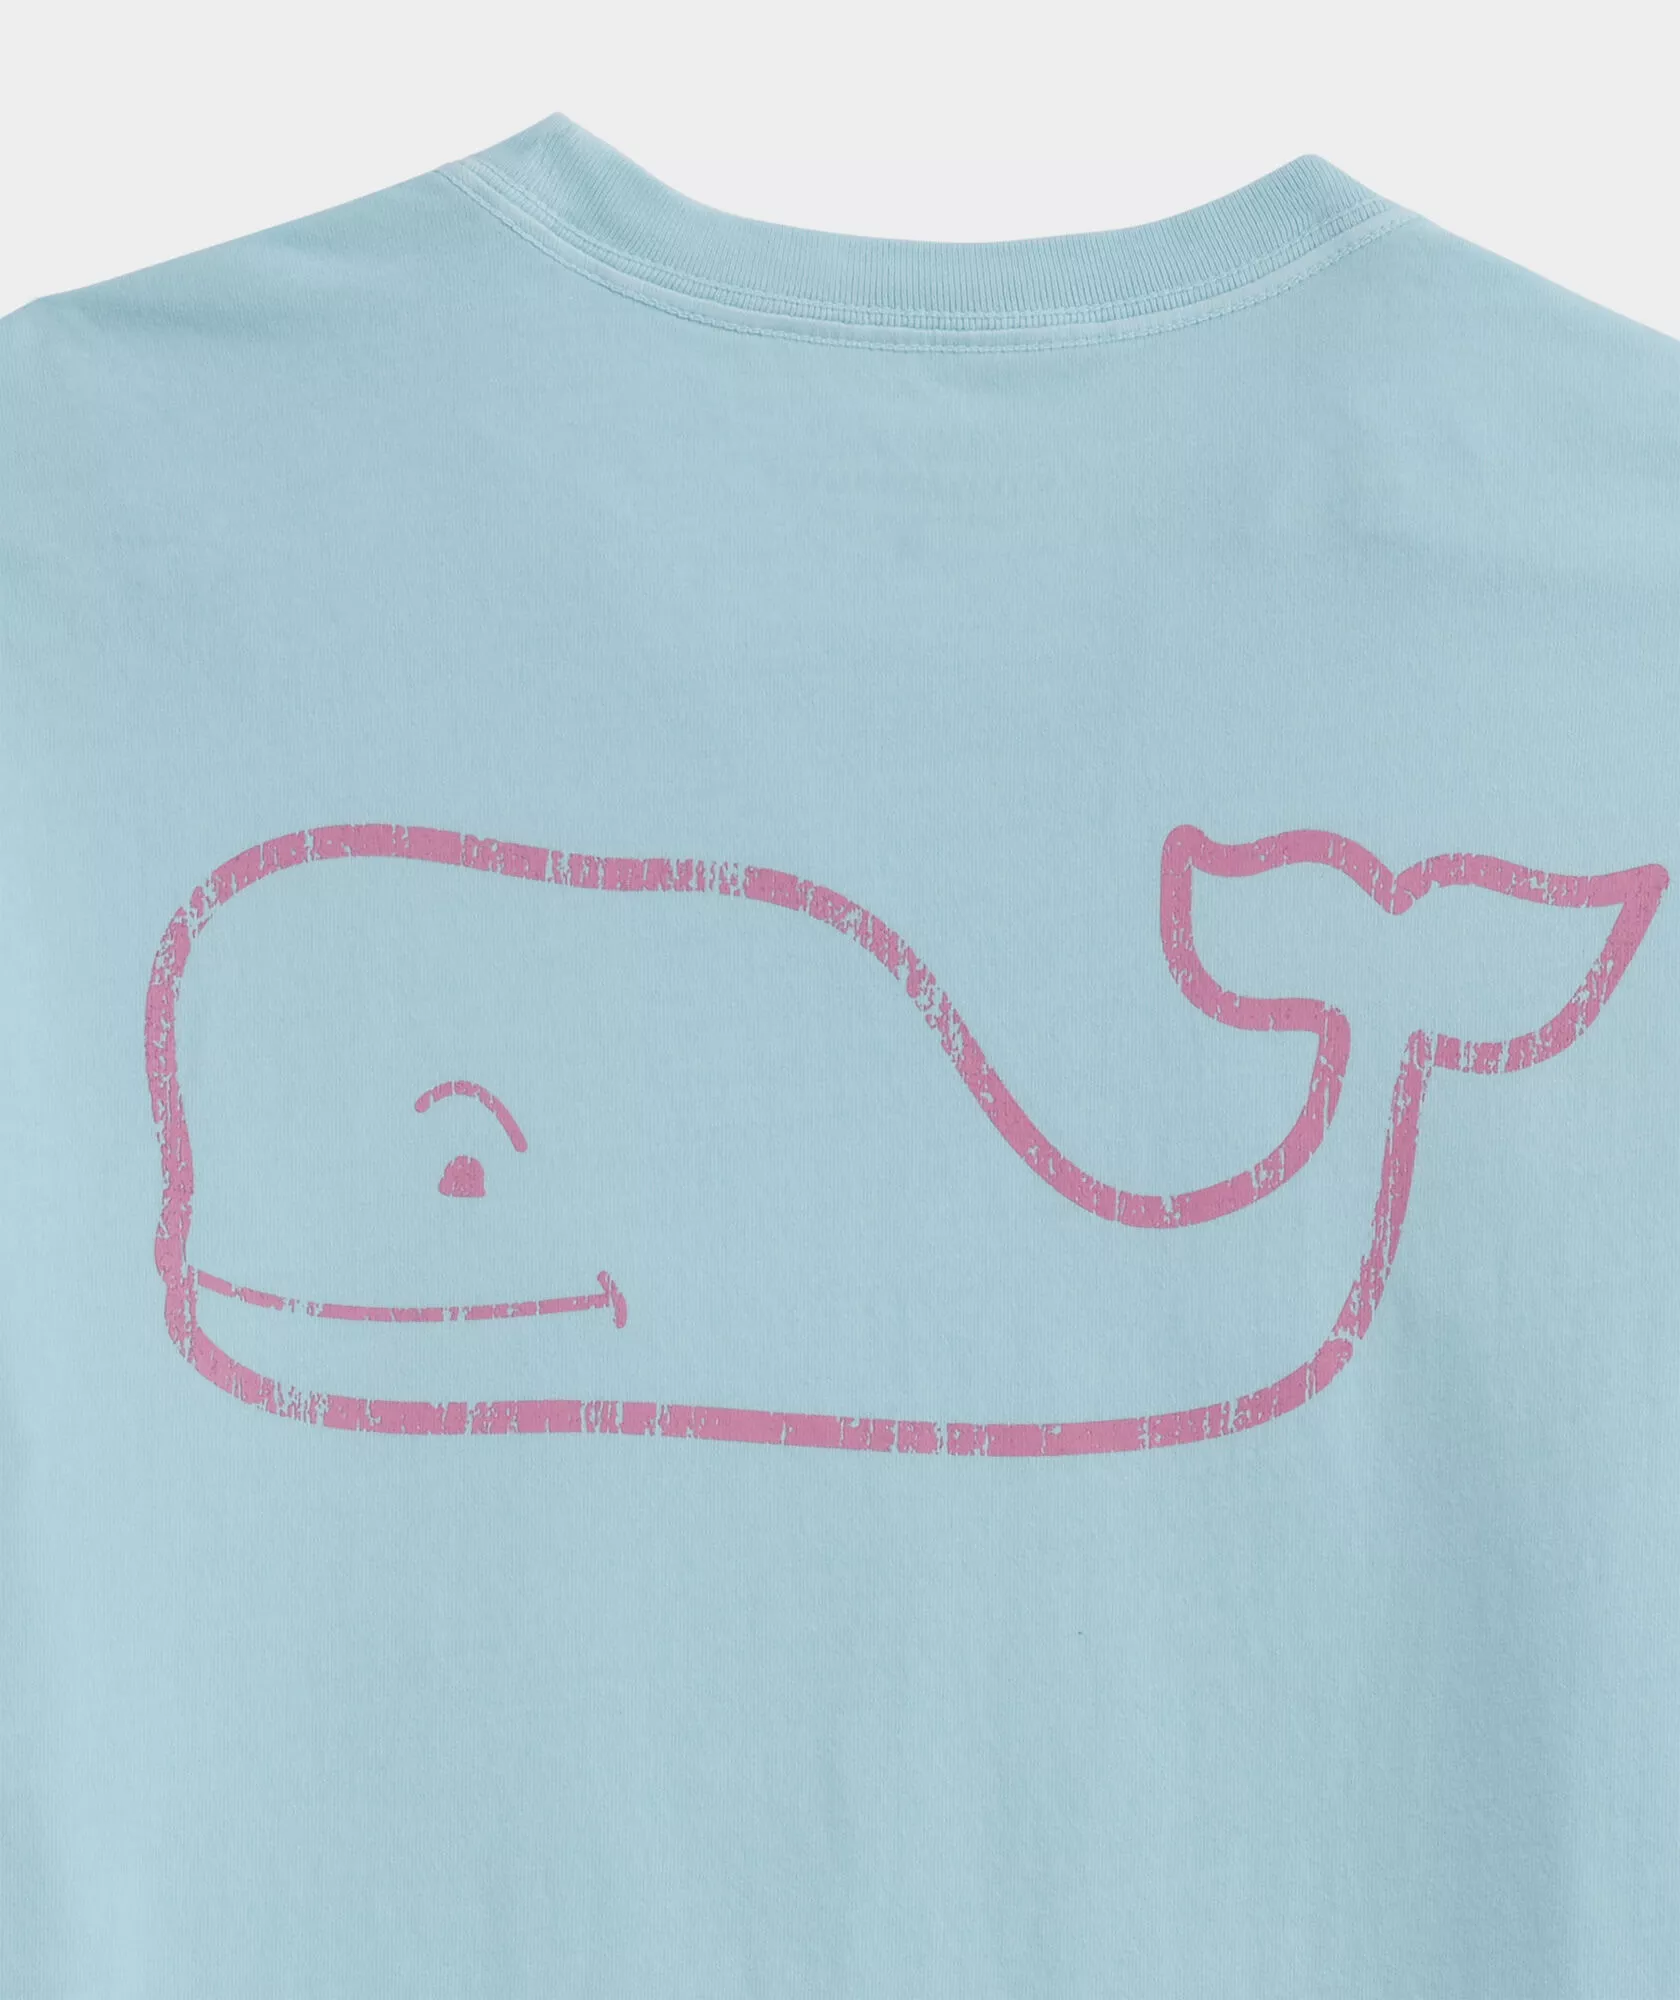 Vineyard Vines Watermelon Whale Pocket Short Sleeve T-Shirt